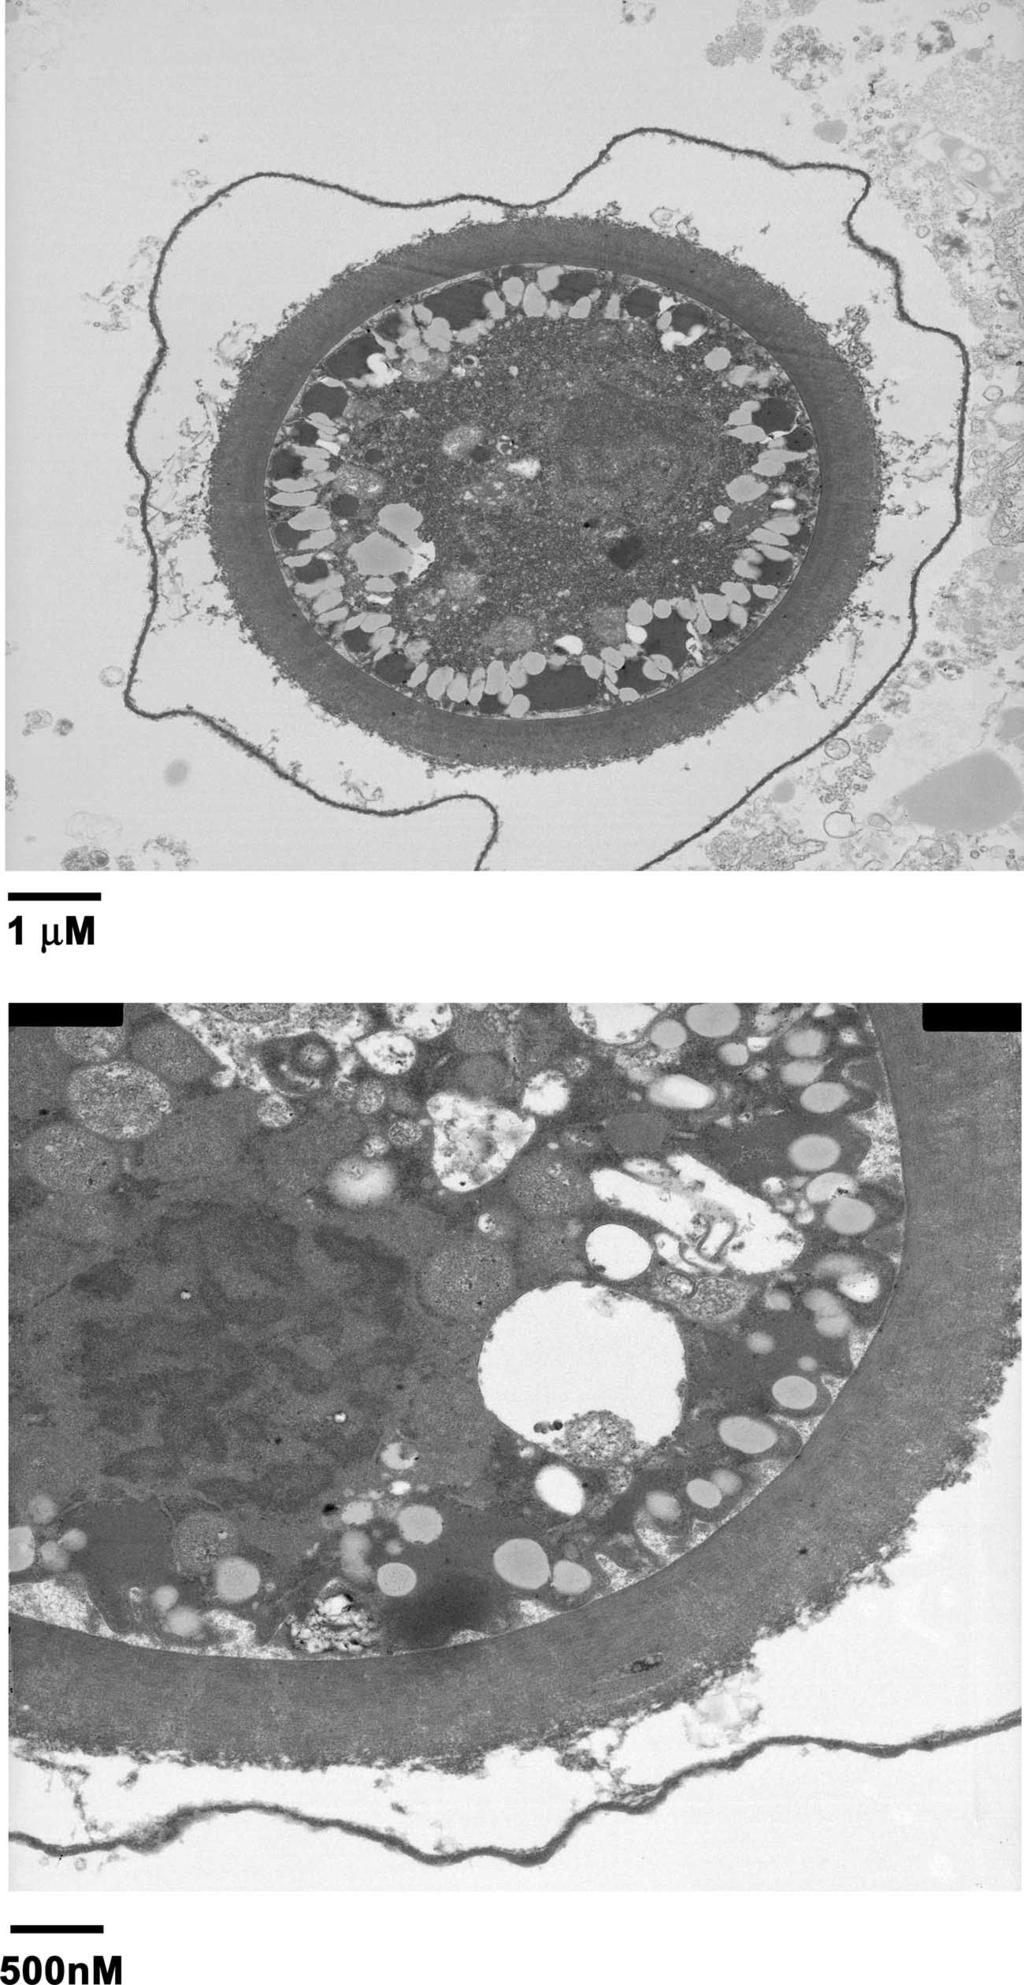 VOL. 21, 2008 INCREASING IMPORTANCE OF BALAMUTHIA MANDRILLARIS 439 FIG. 3. Transmission electron micrographs of a Balamuthia mandrillaris cyst.